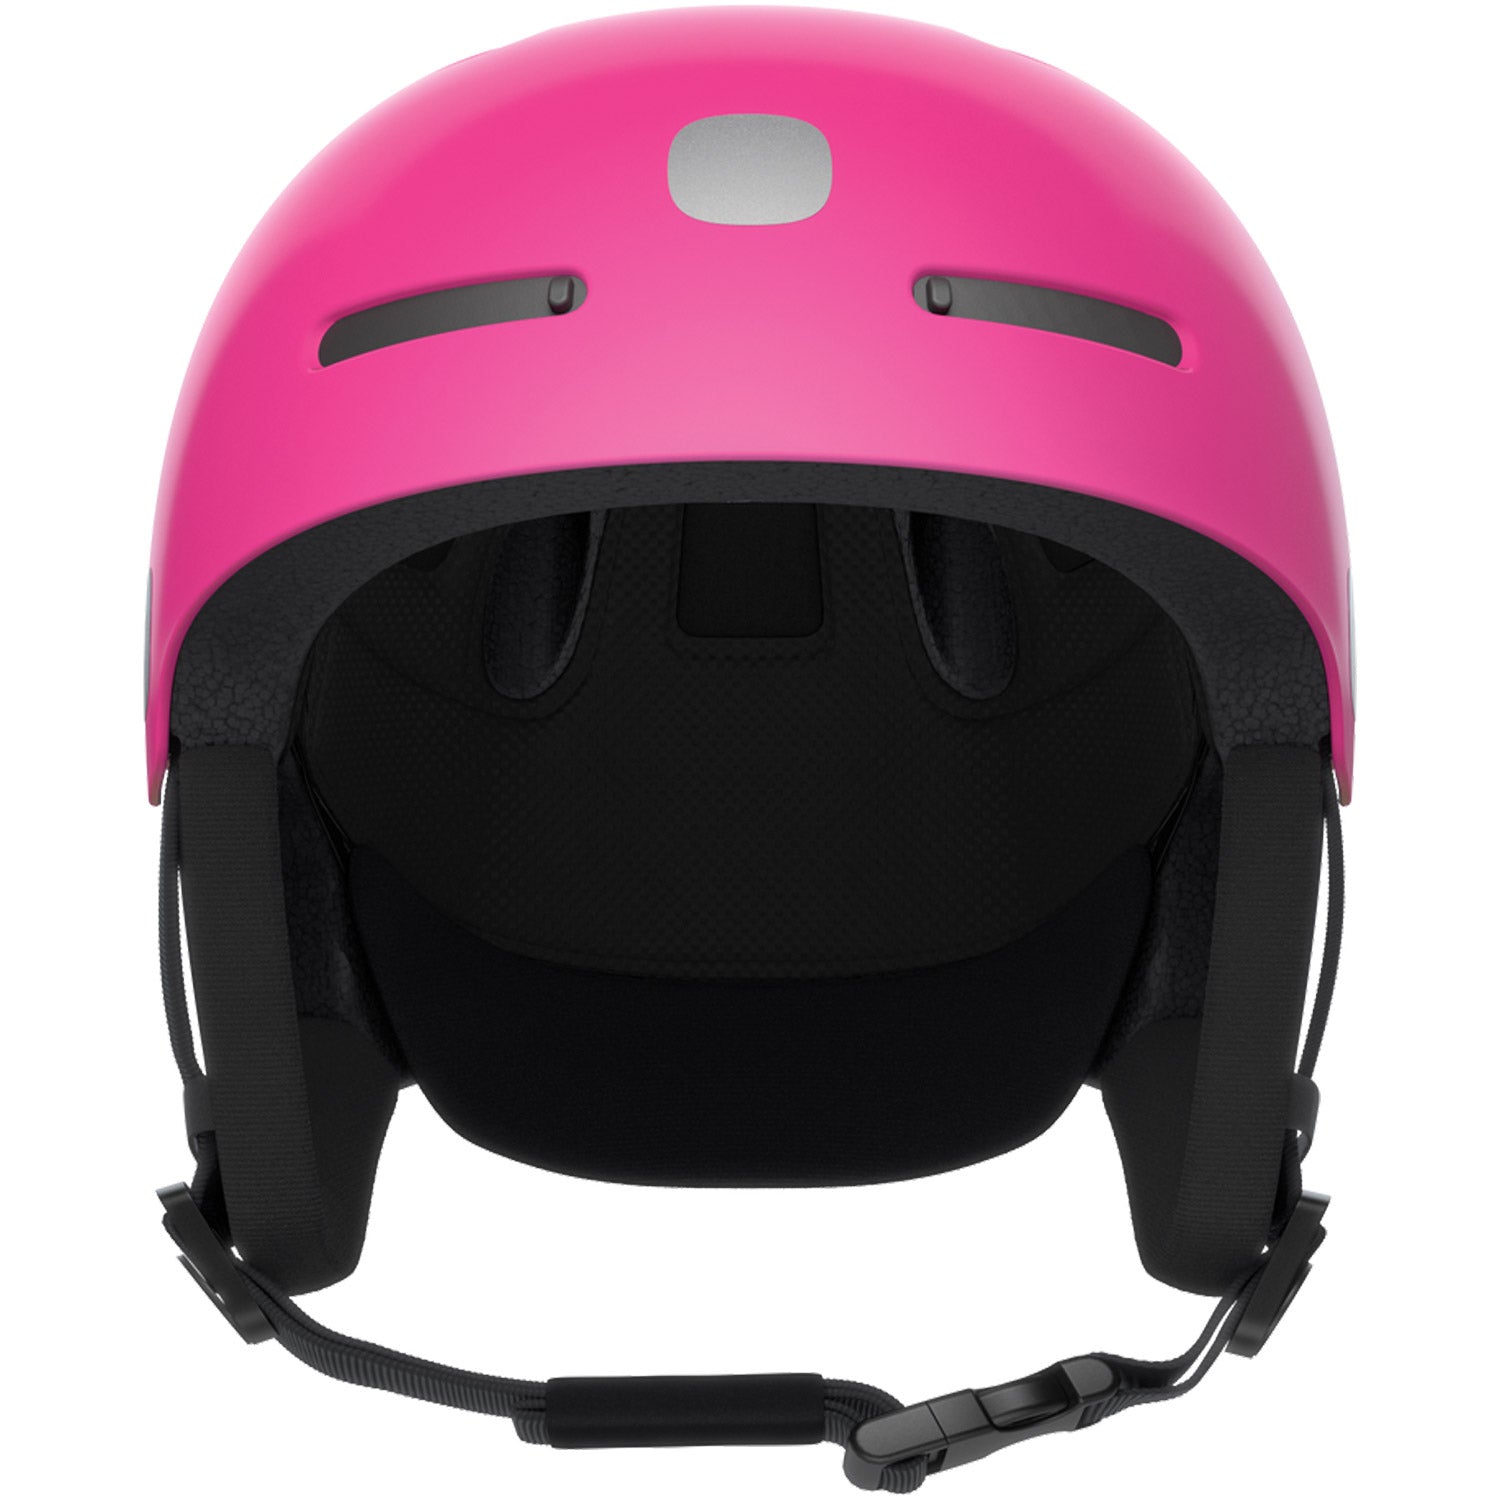 POCito Auric Cut Mips Snow Helmet